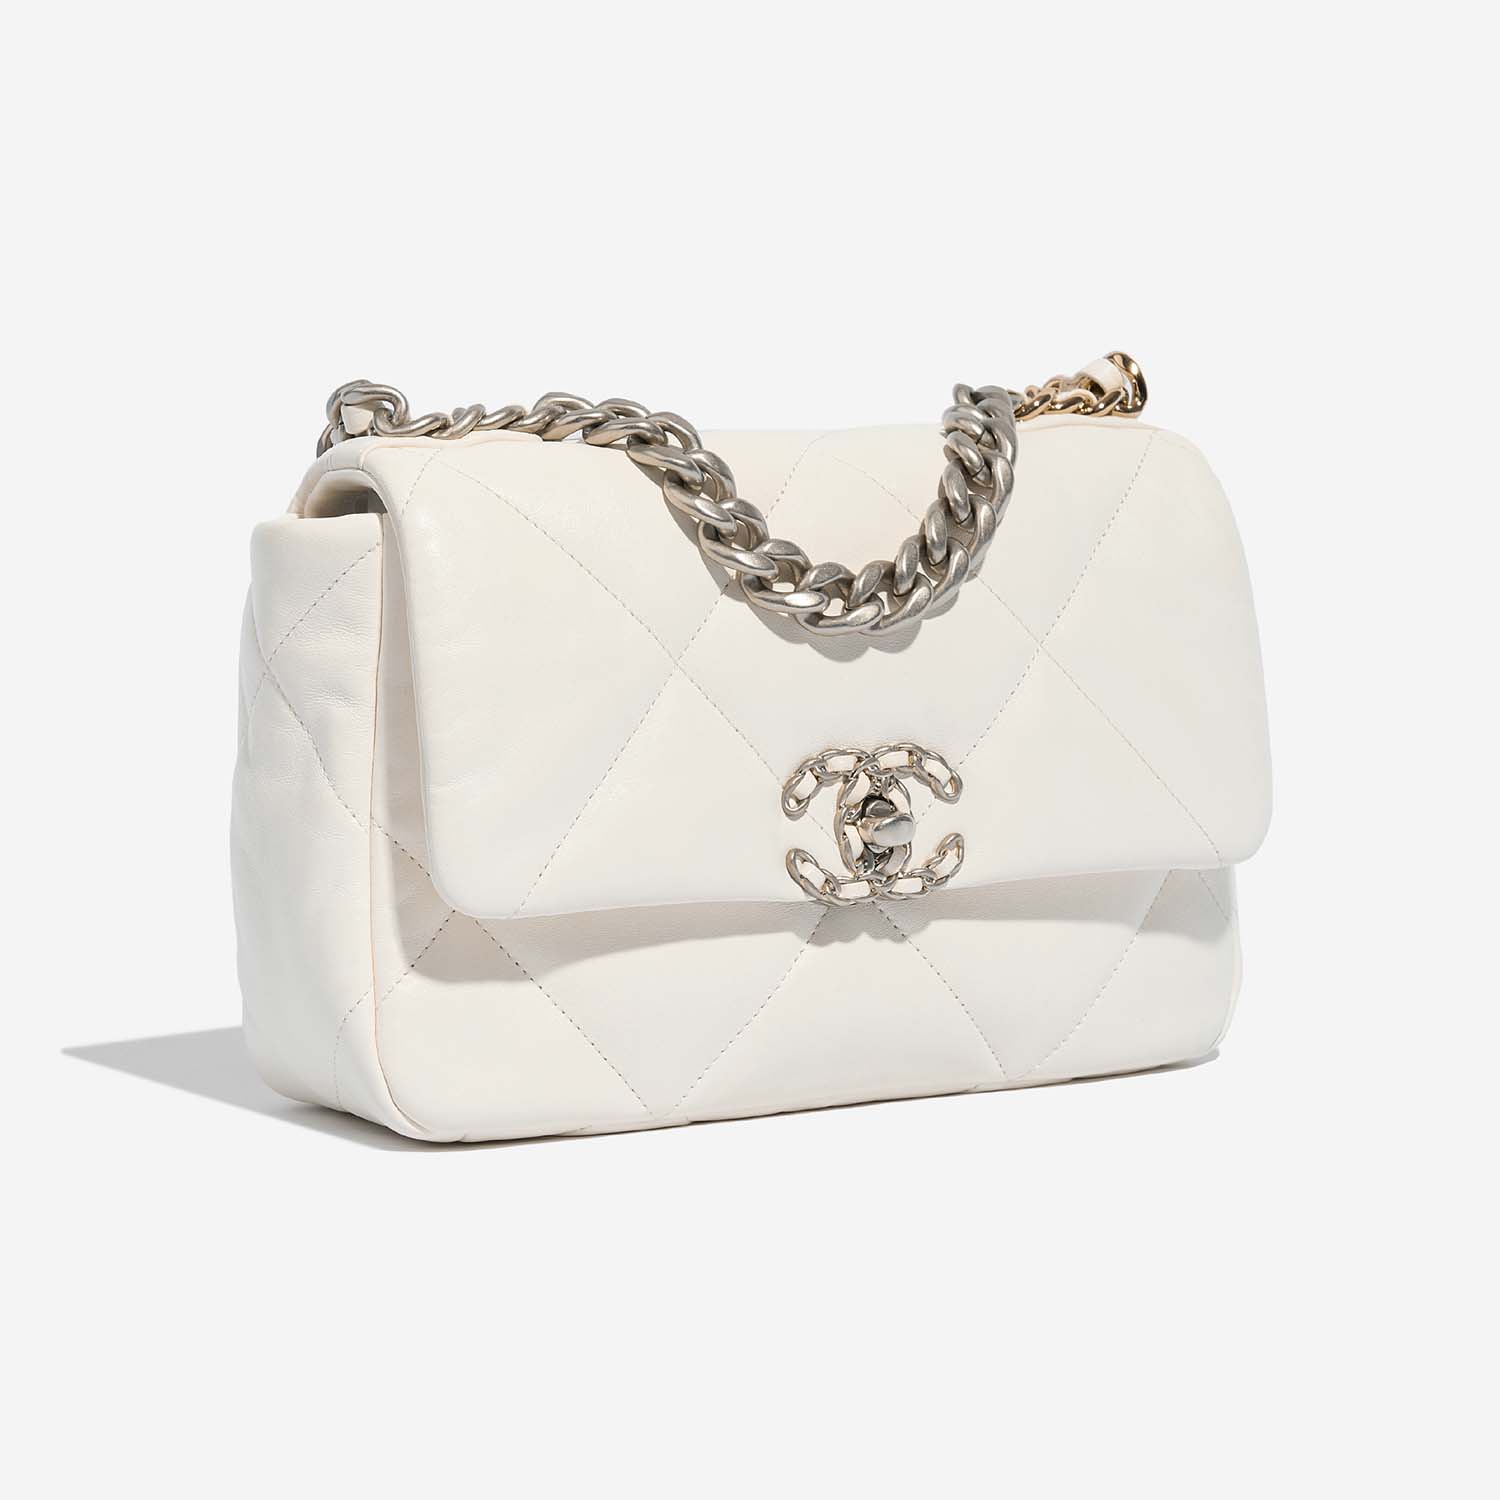 Chanel 19 FlapBag White Side Front  | Sell your designer bag on Saclab.com